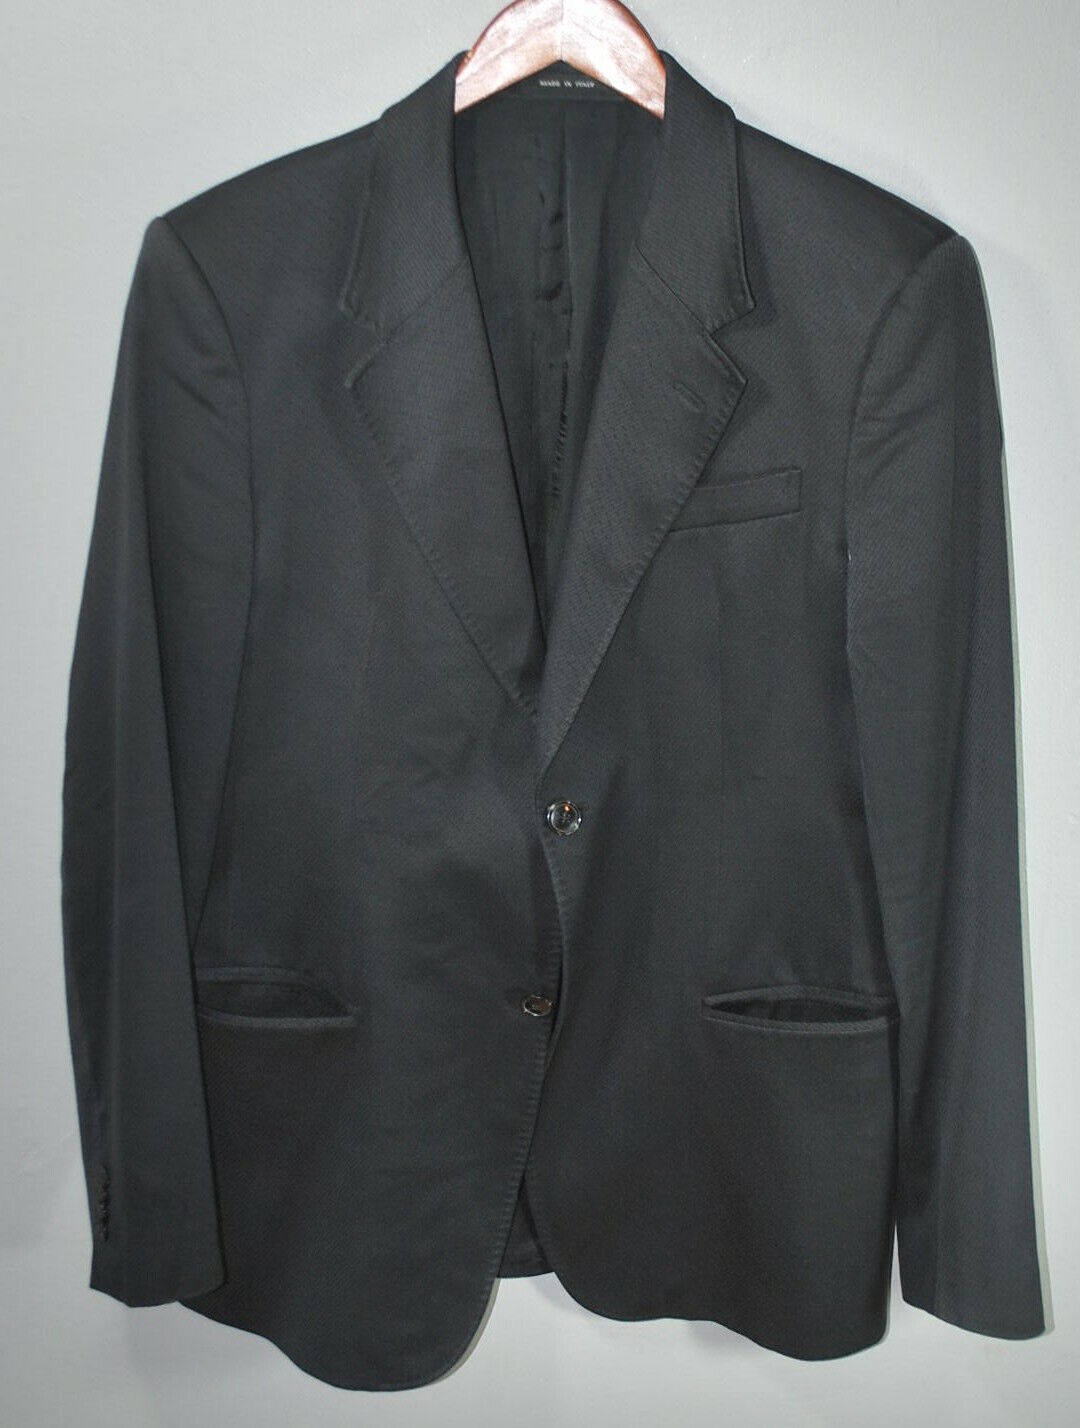 Emporio Armani Josh line black cotton/wool blend 42R sport coat made Italy